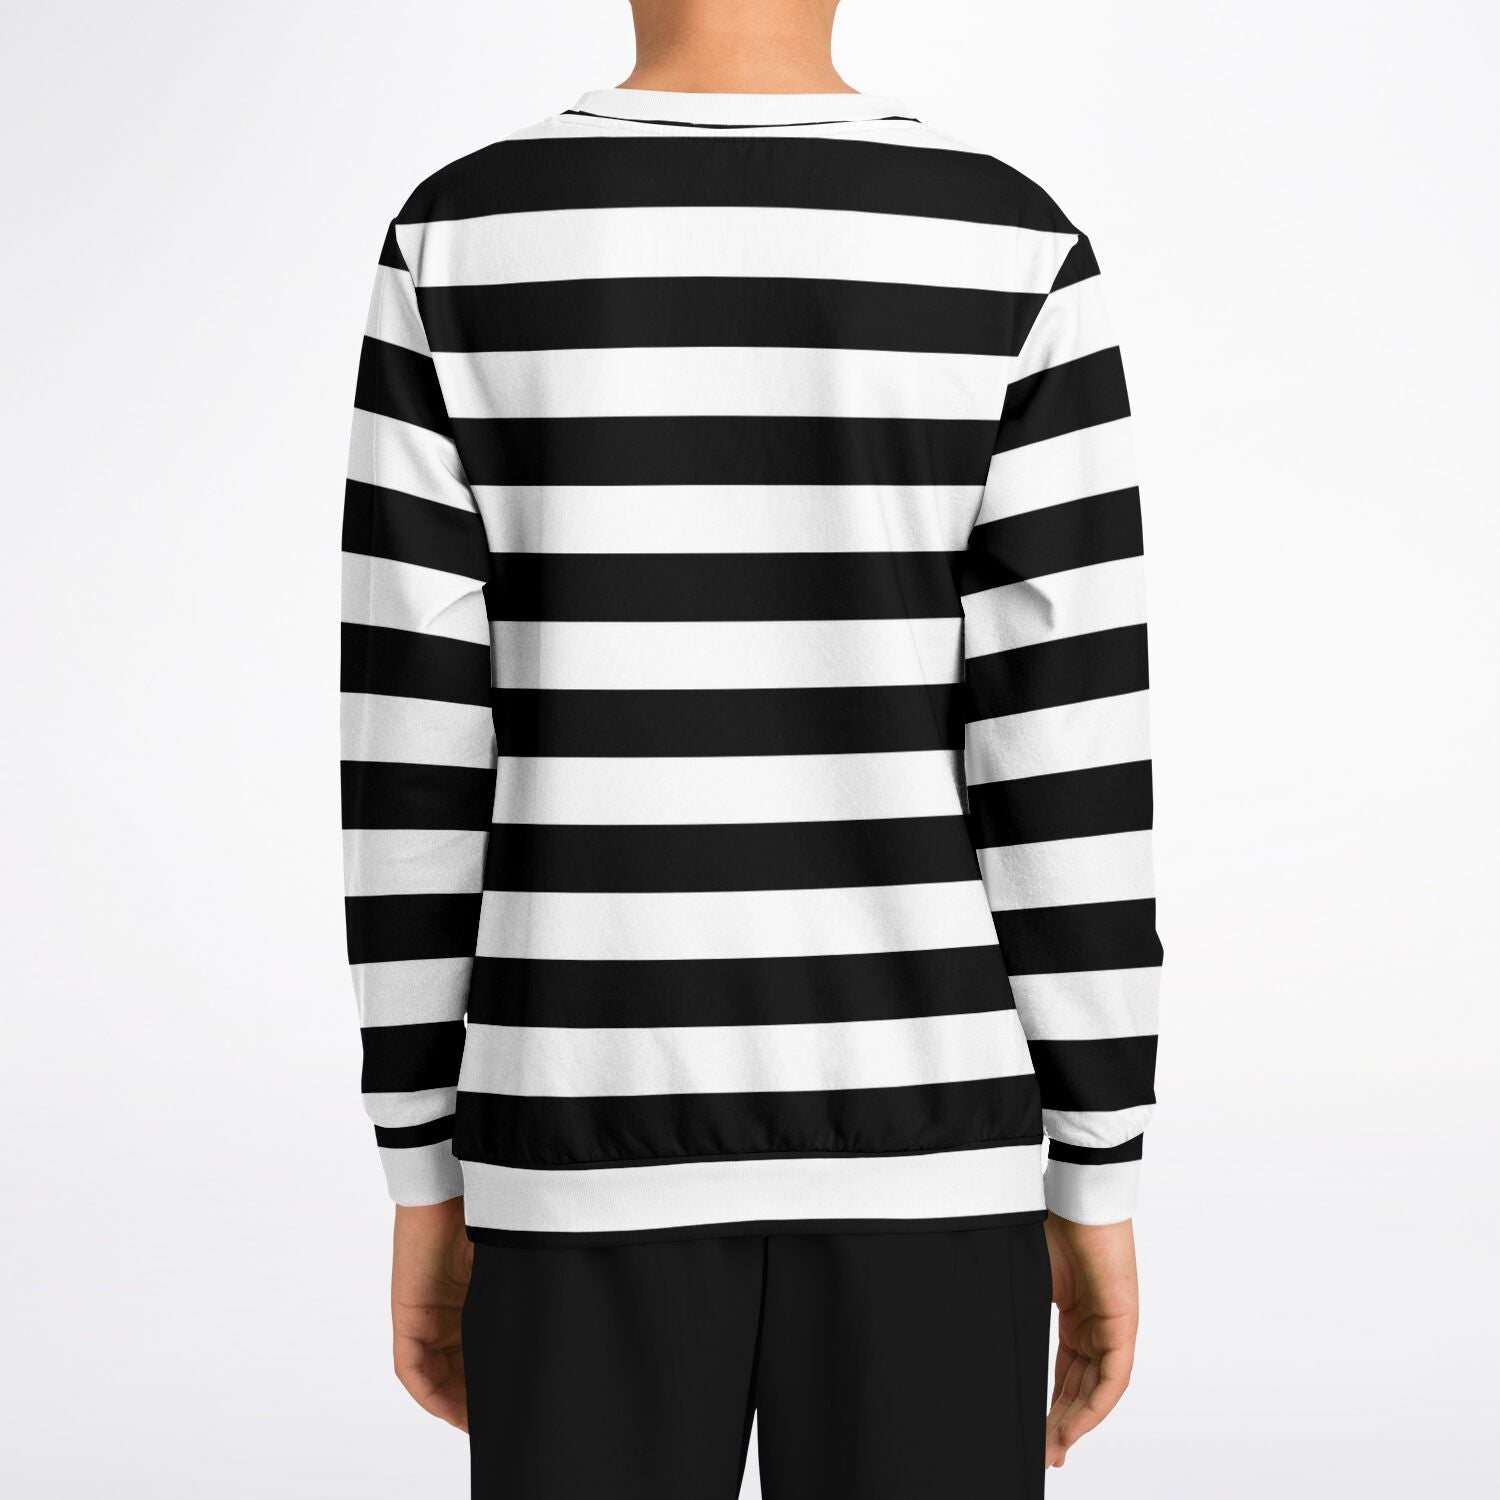 Prison Stripes Youth Unisex Costume Sweatshirt